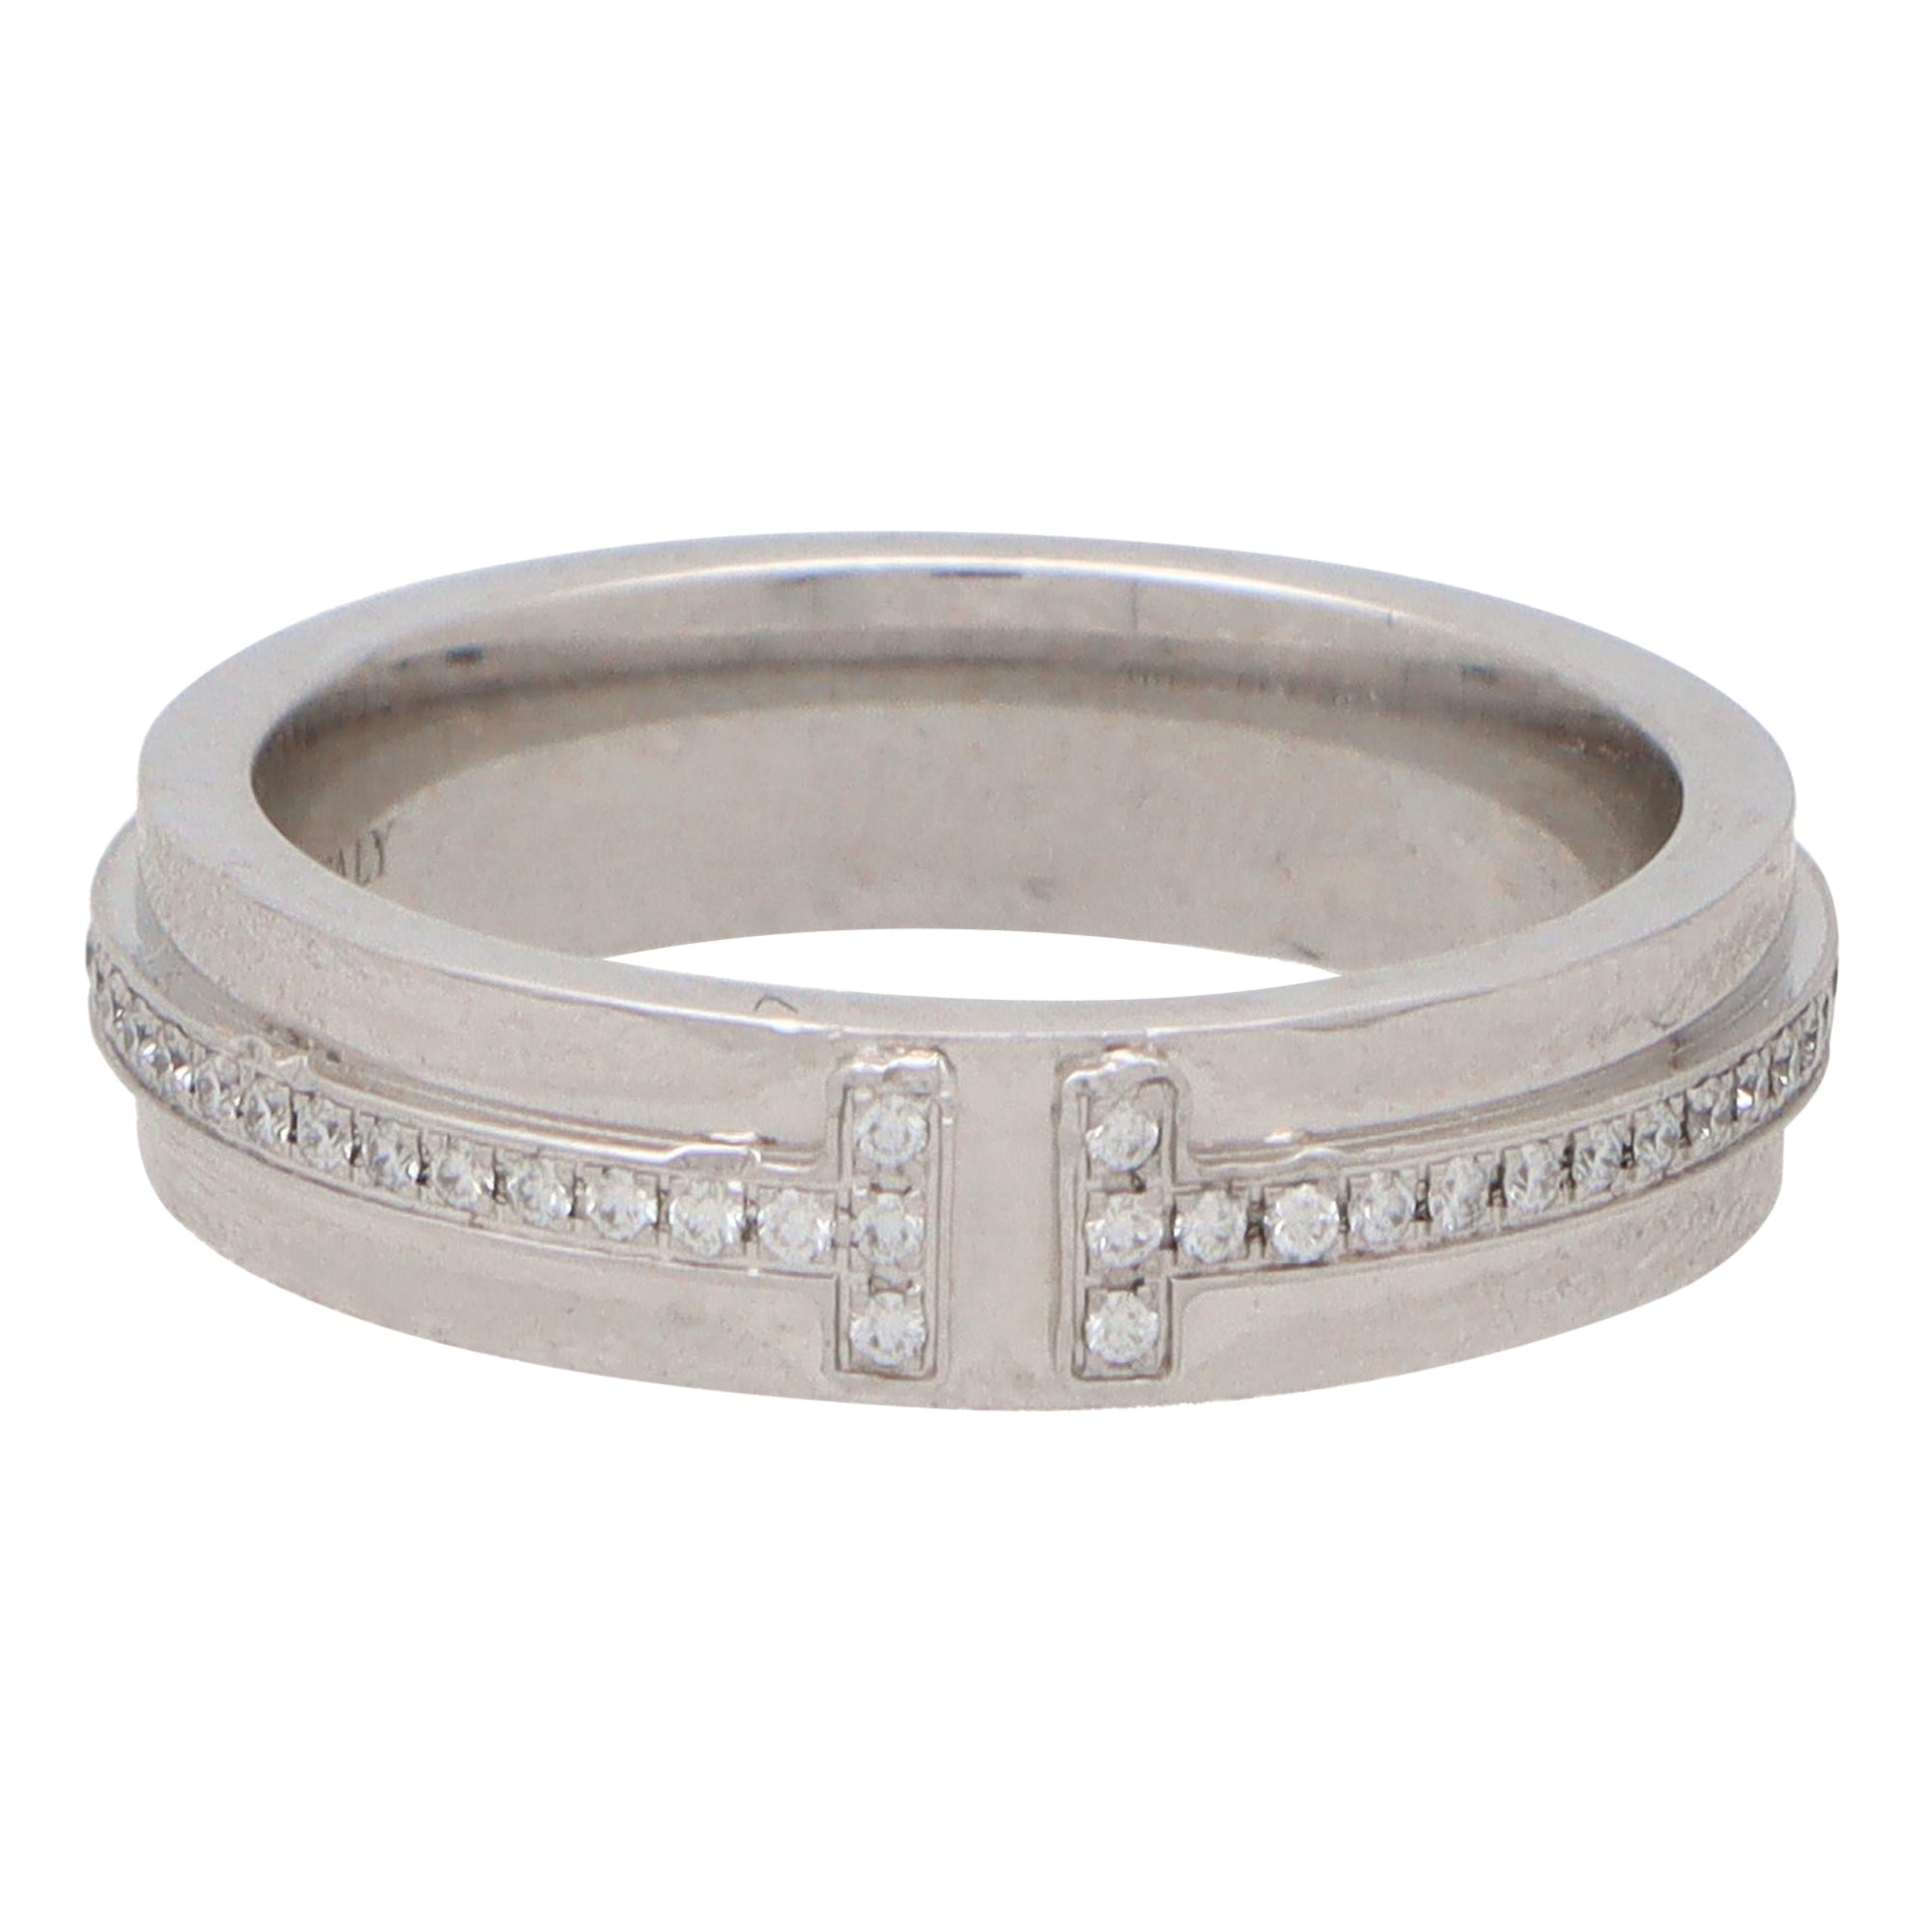 Vintage Tiffany & Co. 'Tiffany T' Narrow Diamond Band Ring in 18k White Gold